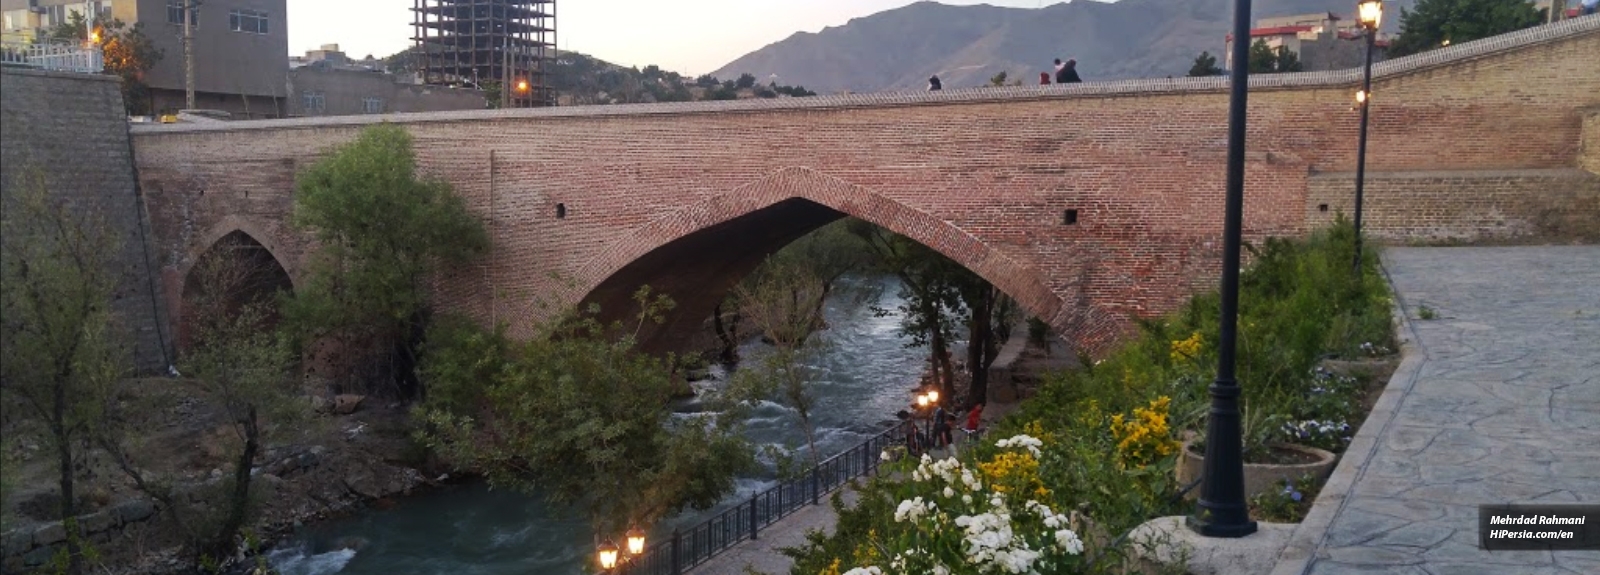 Shah Abbasi Bridge, A monument from Safavid era